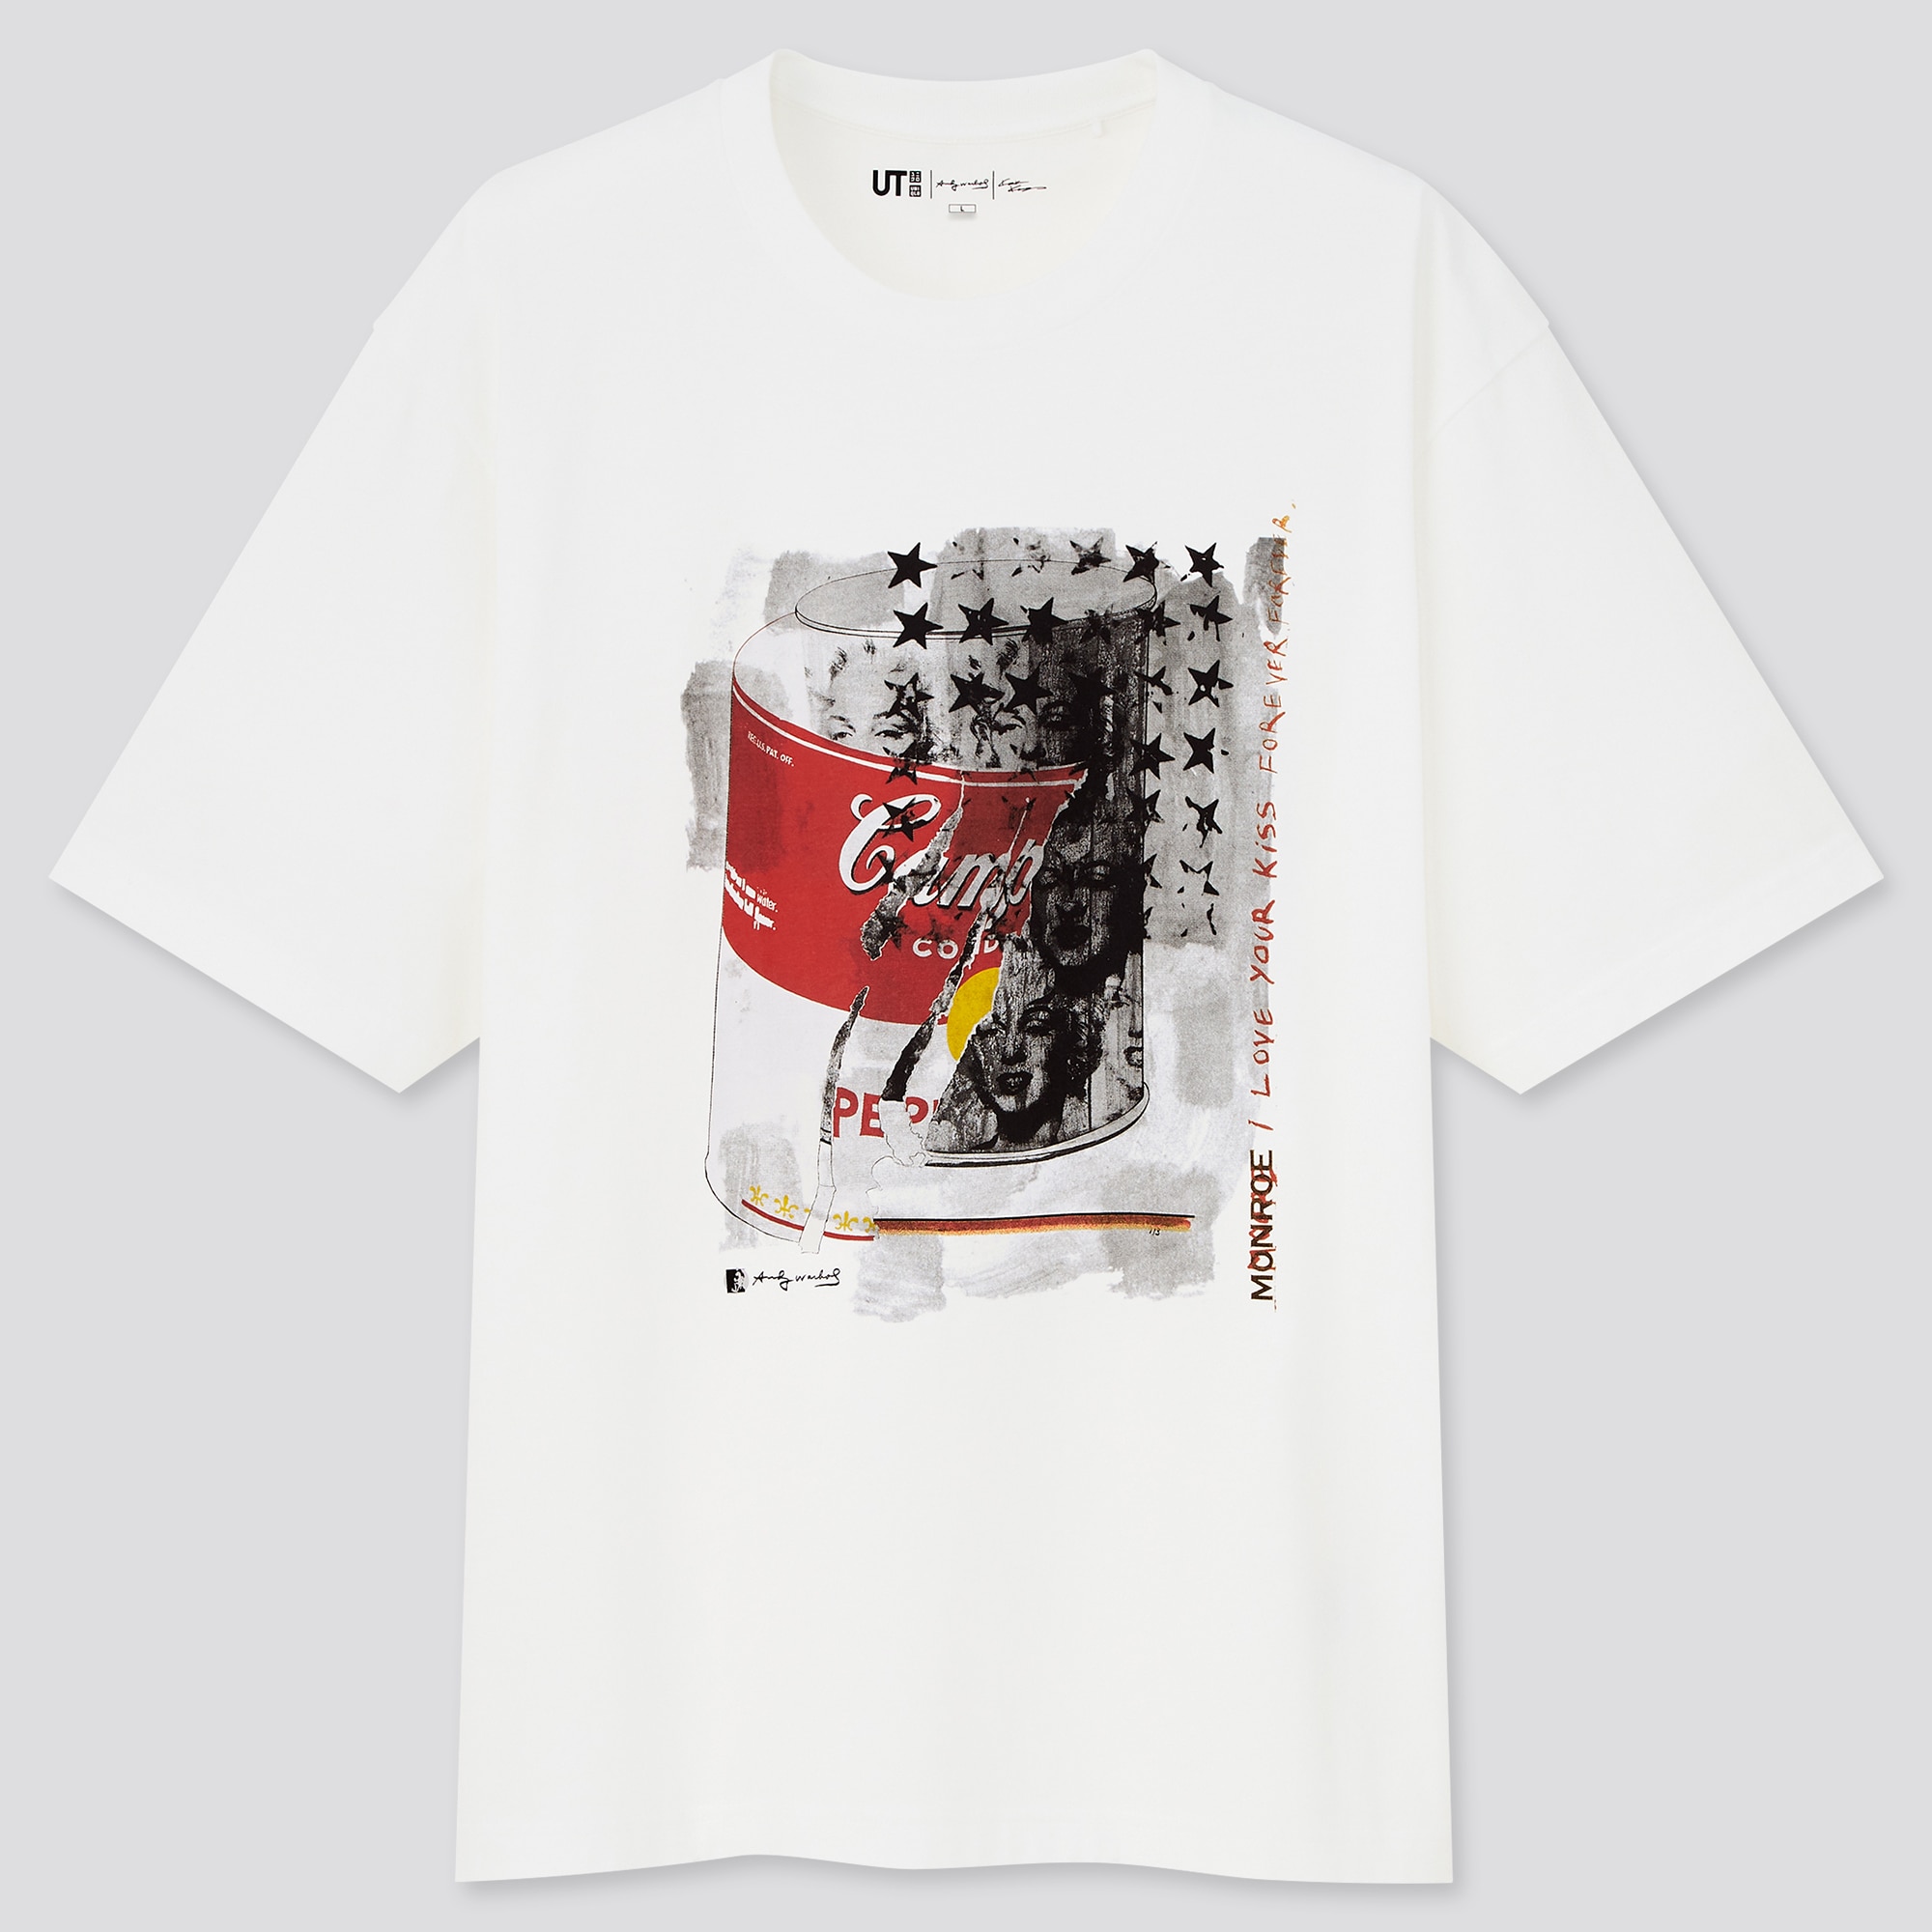 Andy Warhol X Kosuke Kawamura Men’s Original Oversized Uniqlo T Shirt Sz L